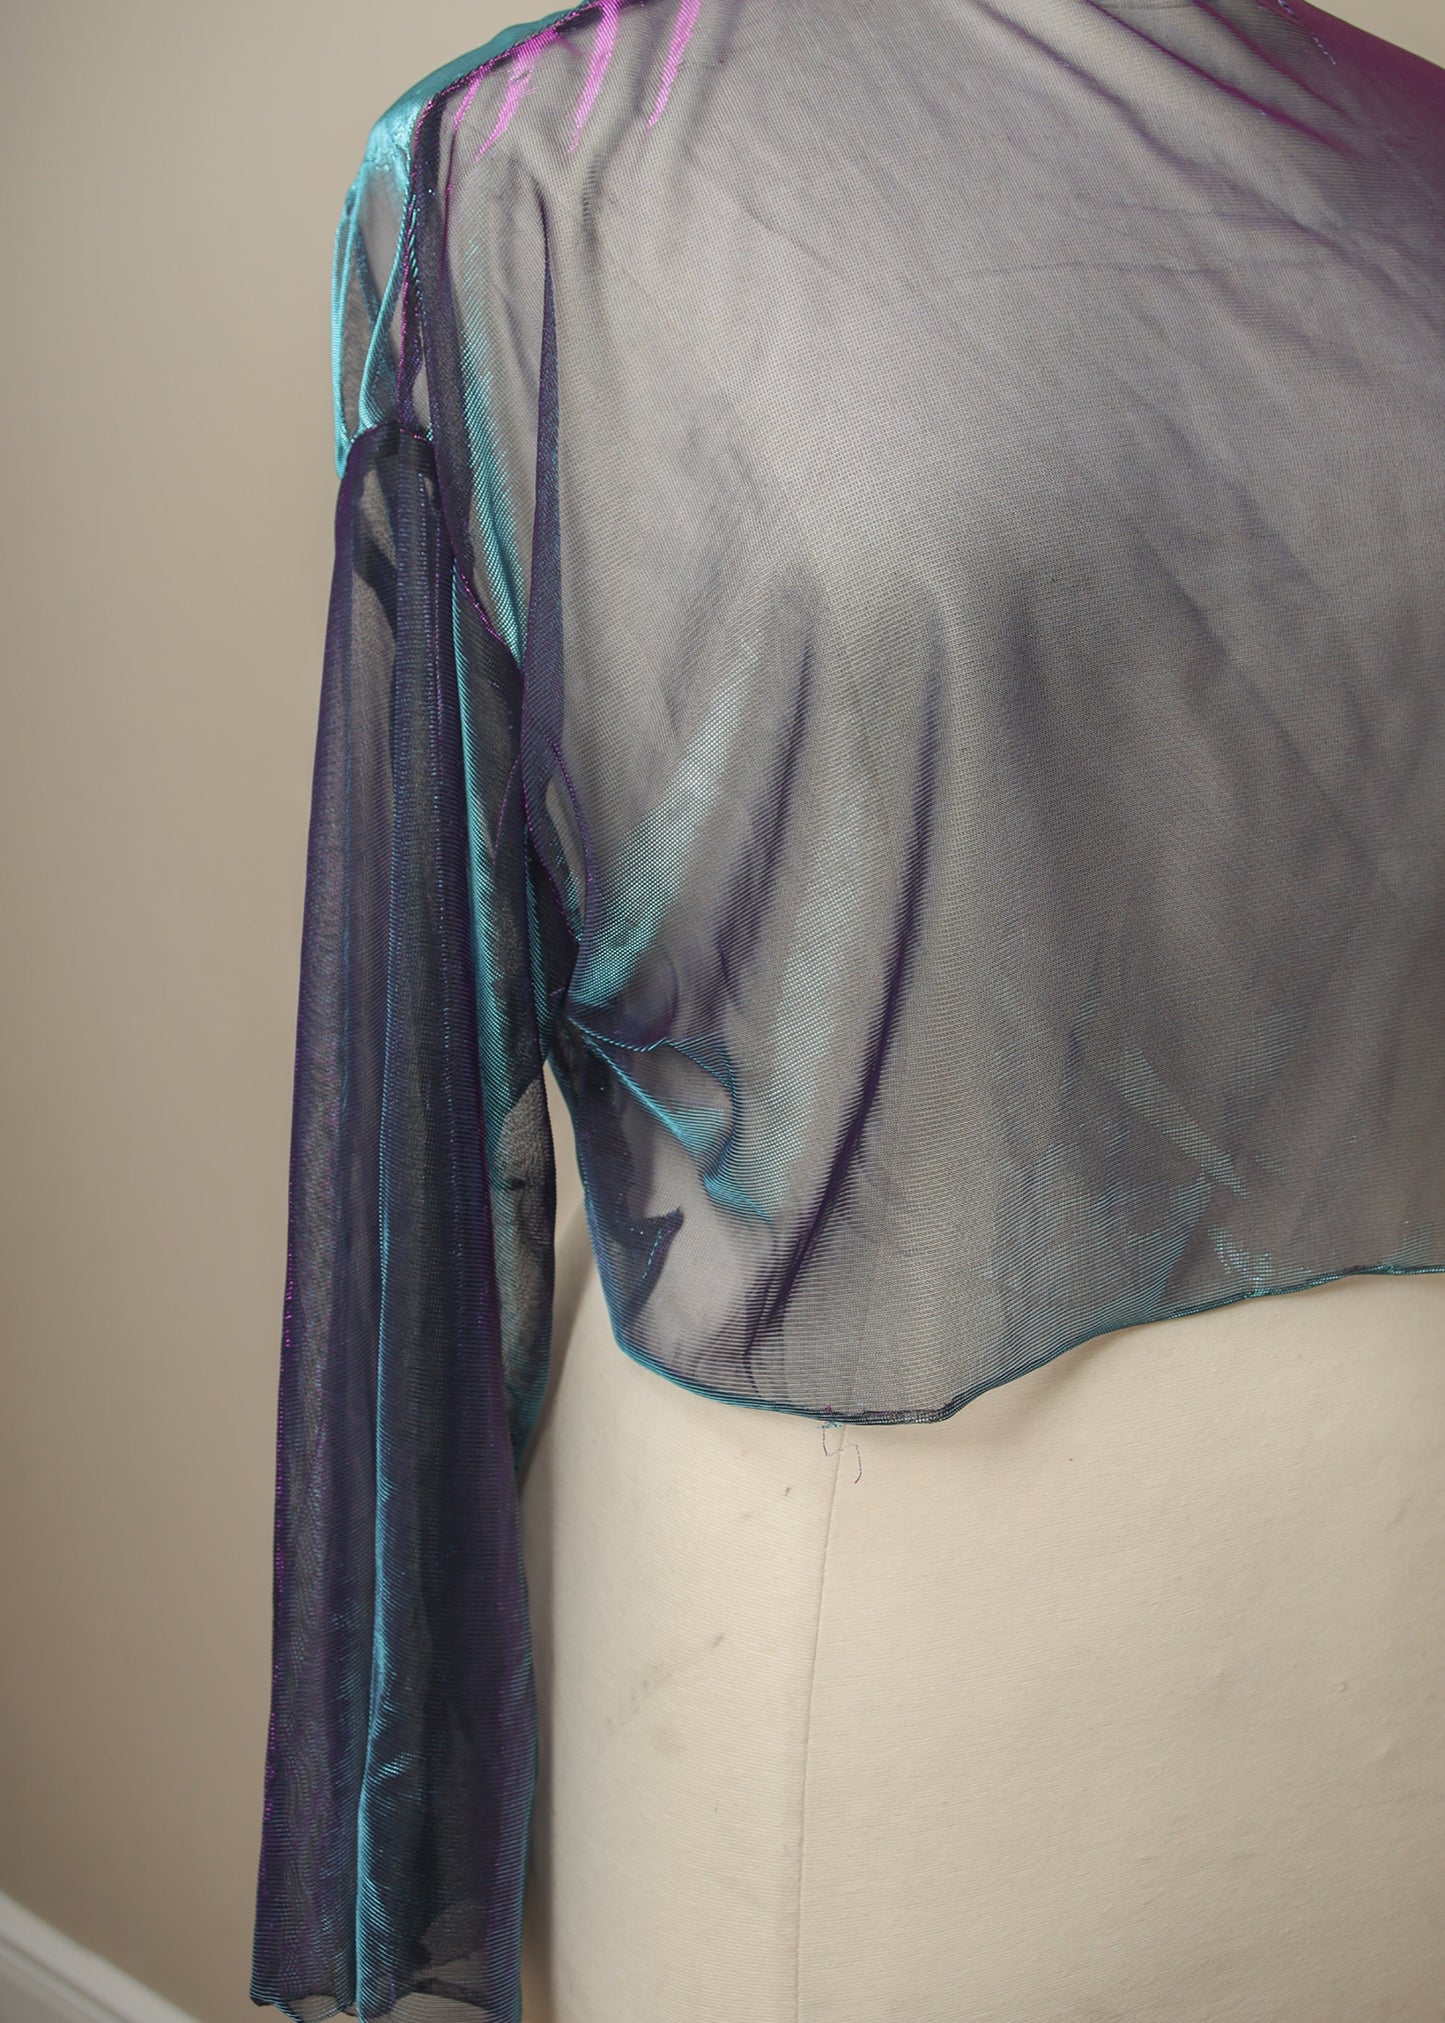 Iridescent Mesh Top | Blue Long Sleeve Pullover | Sheer Cropped Blouse | Fairycore Cottagecore Kawaii Festivalwear | Sexy Spring Summer